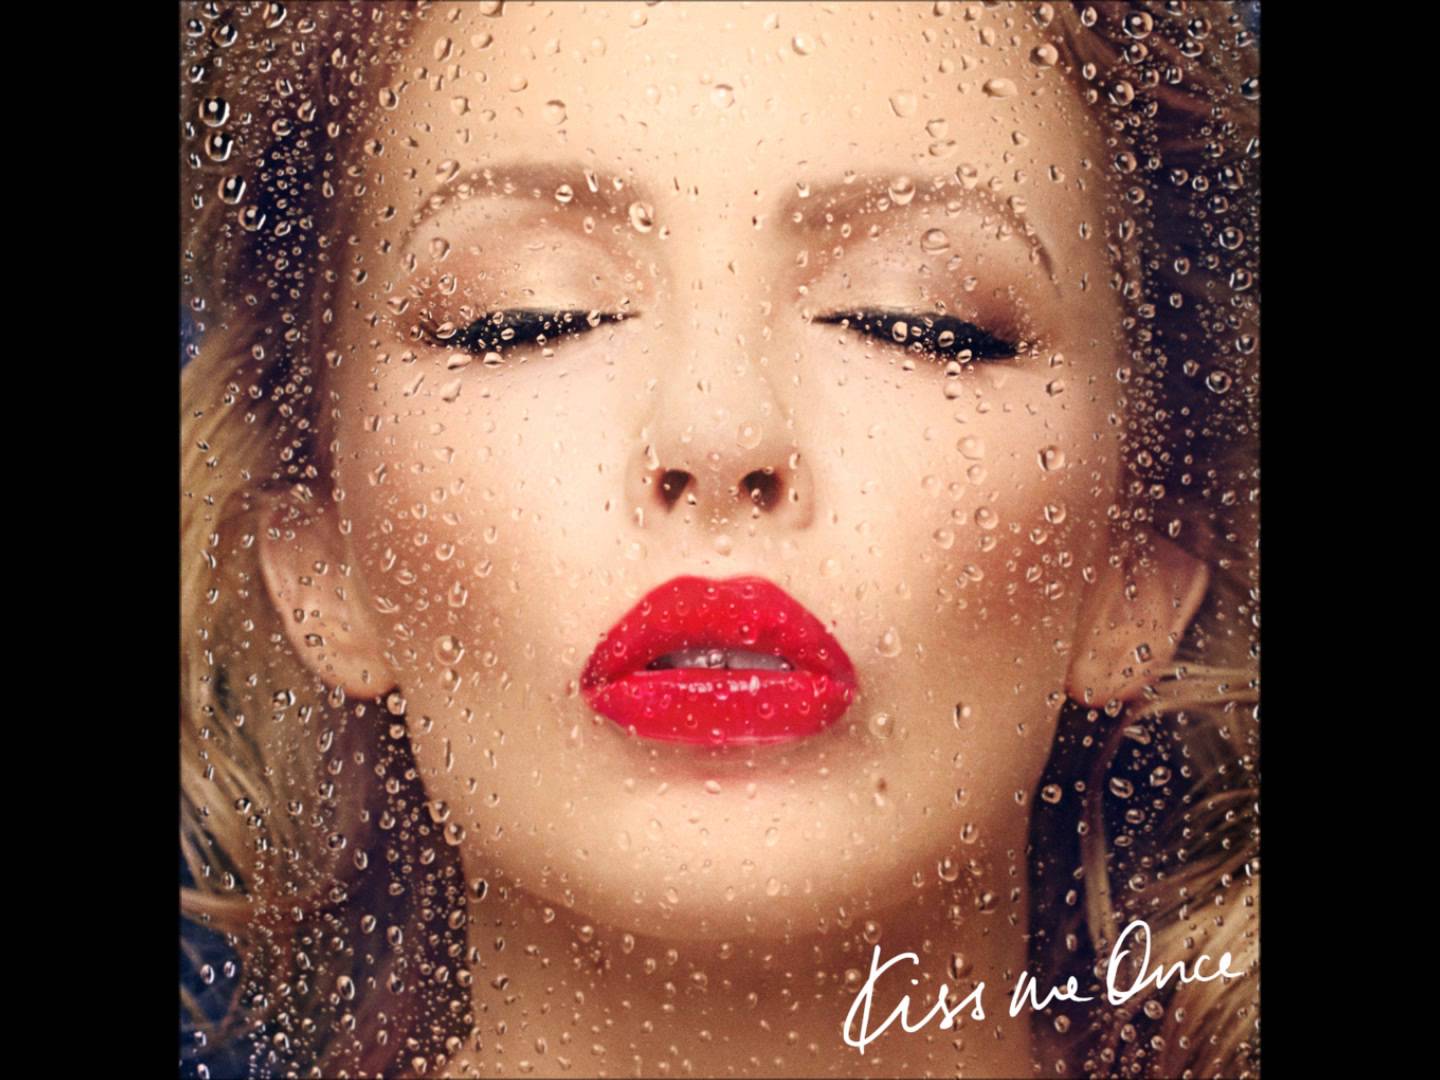 Kylie Minogue - Sexy Love